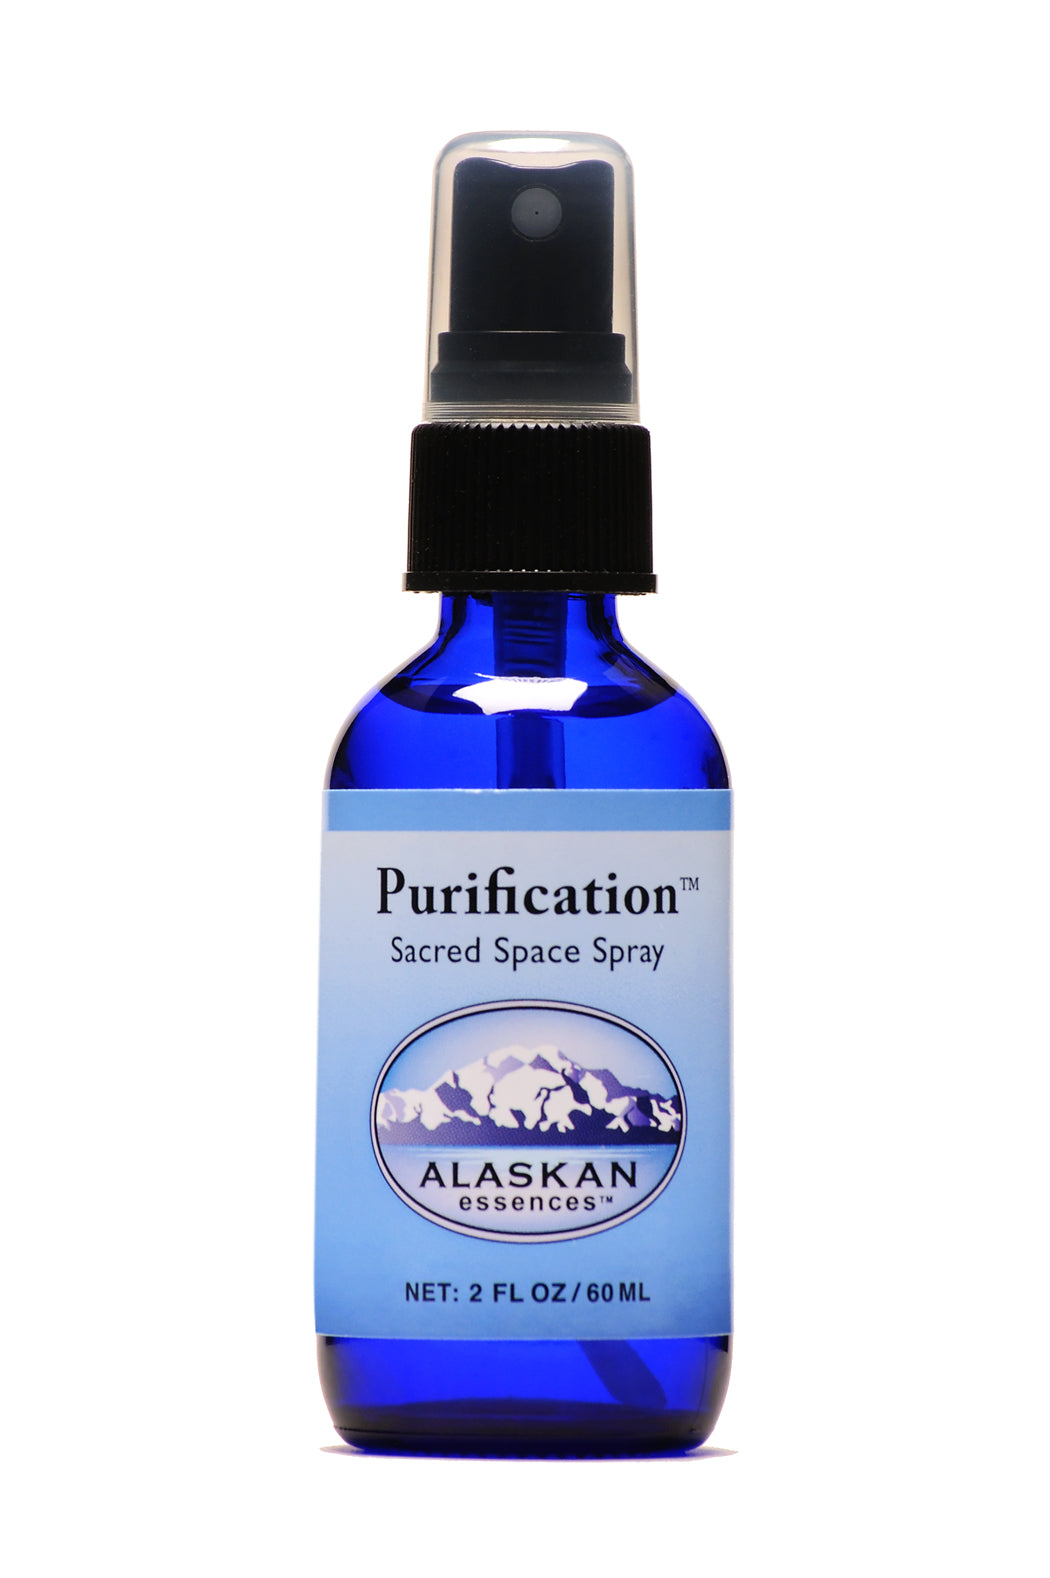 Purification essence spray